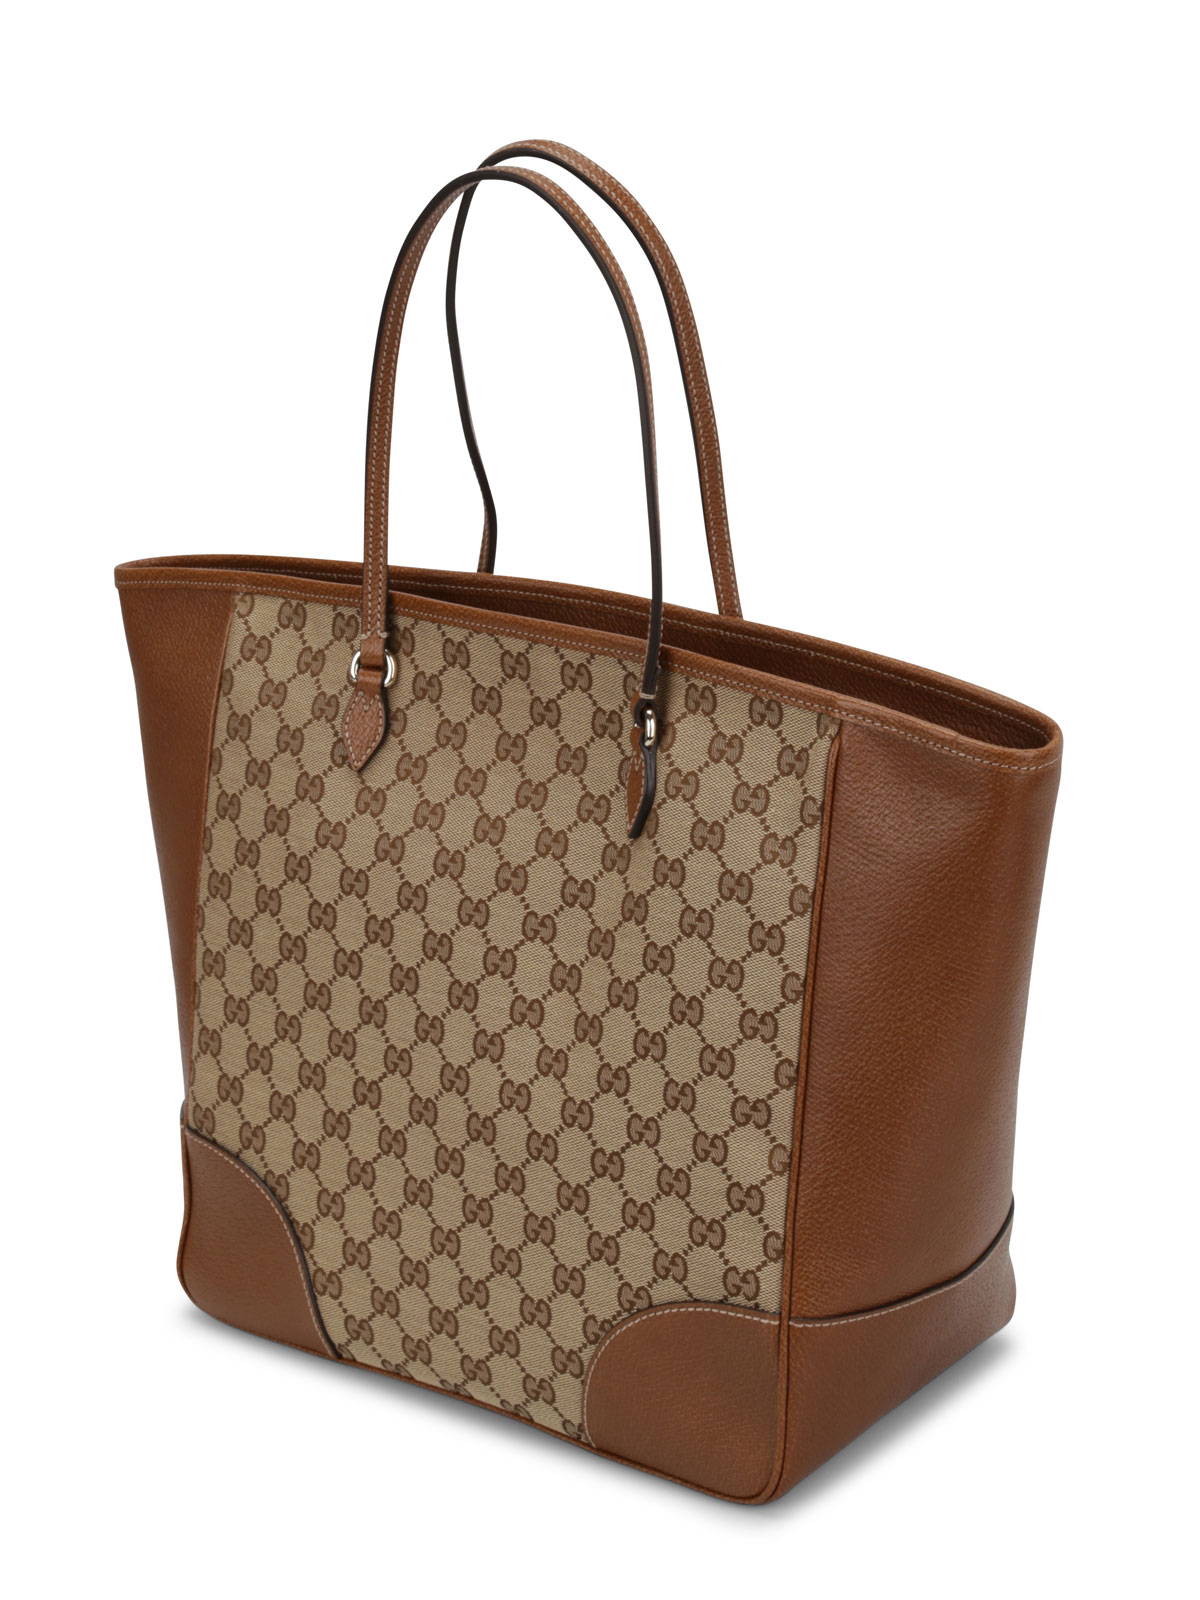 Gucci Brown Leather Bree Tote Bag